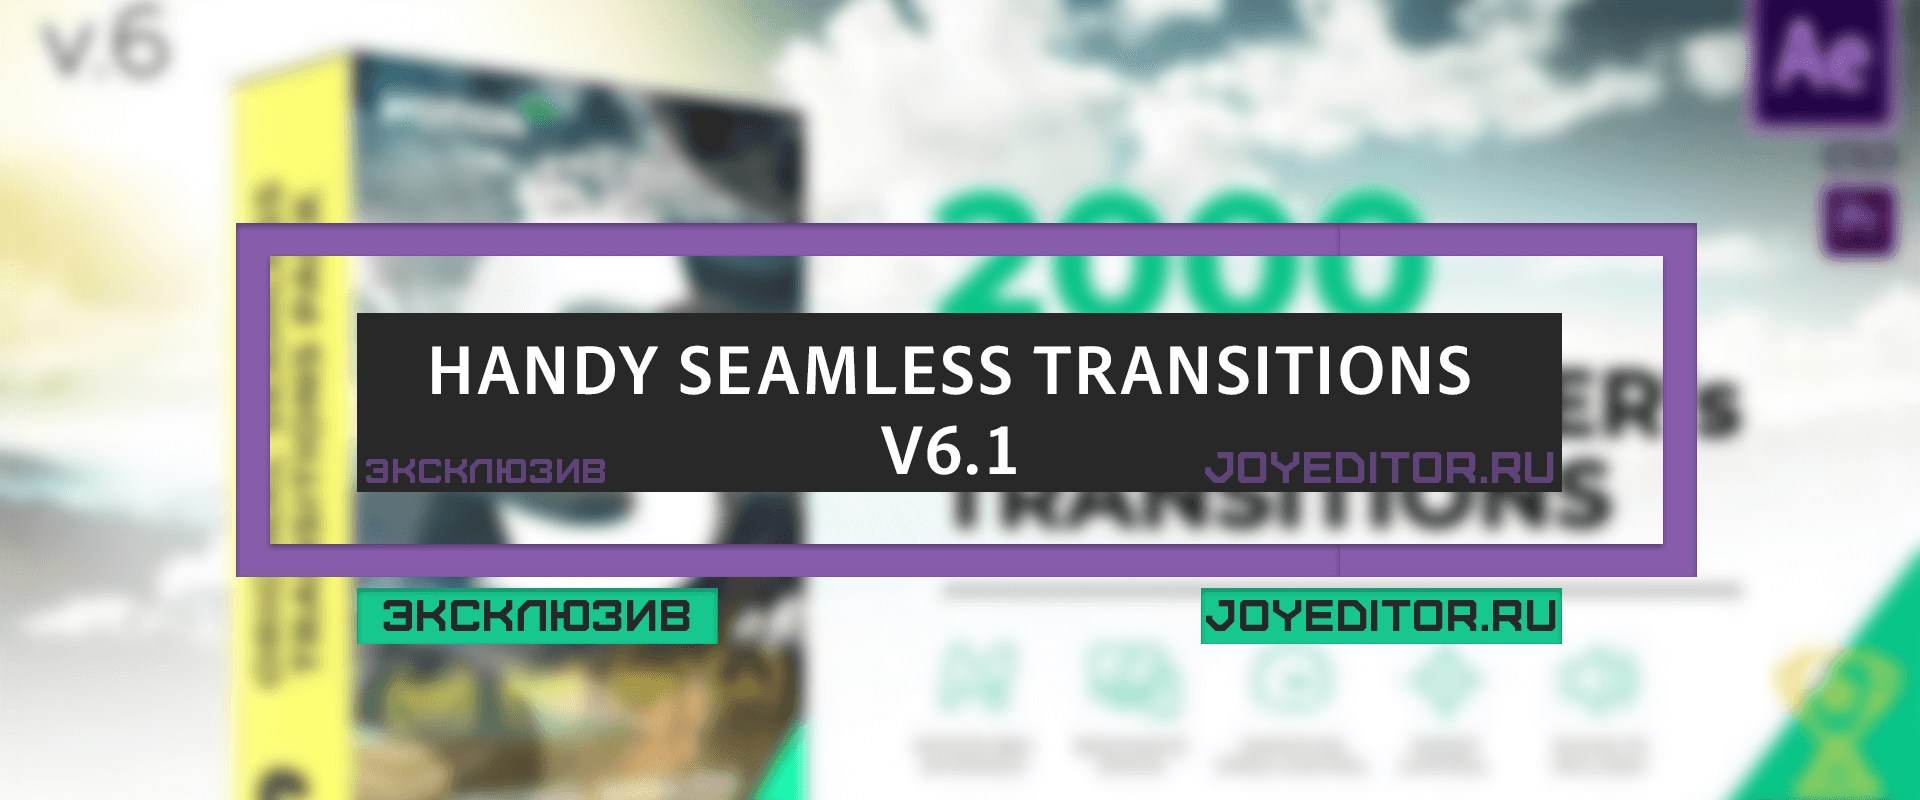 HANDY SEAMLESS TRANSITIONS V6.1